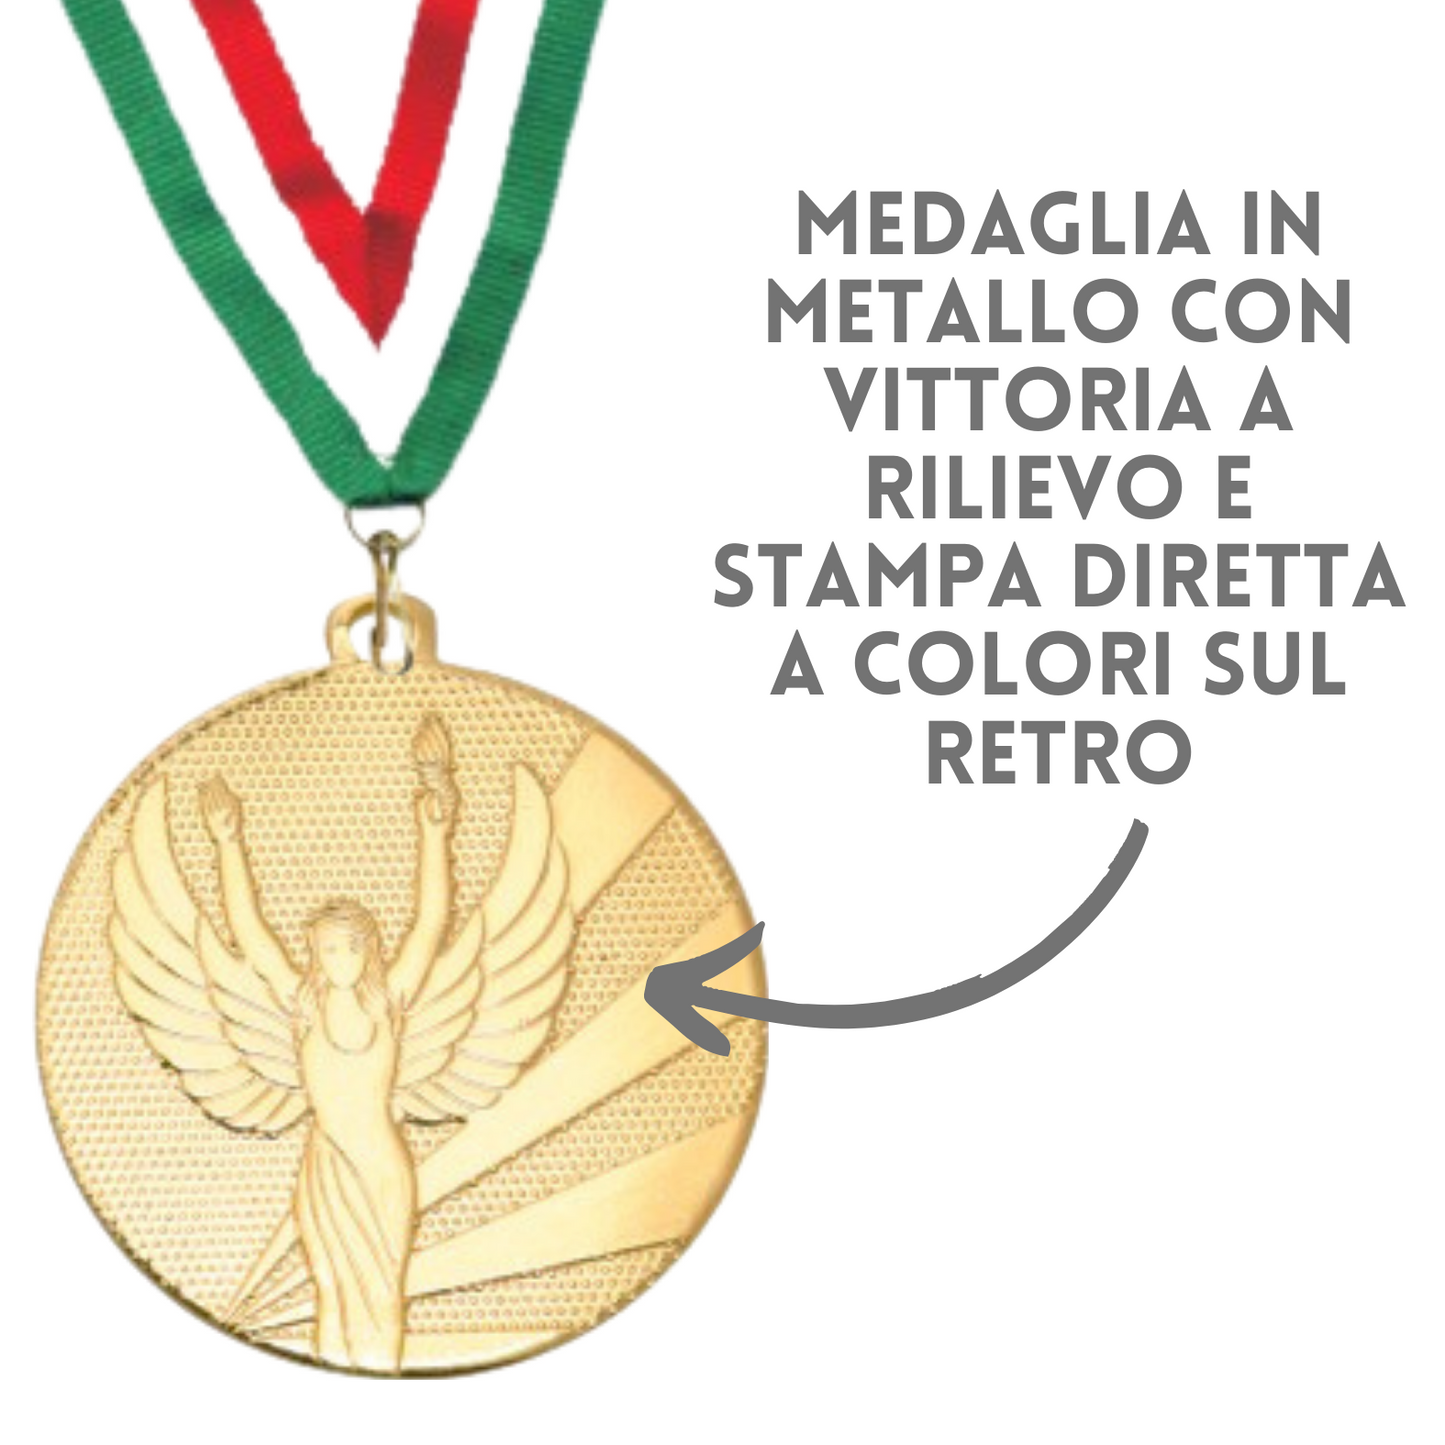 Tris di medaglie personalizzate | Cod. 23.009.23T